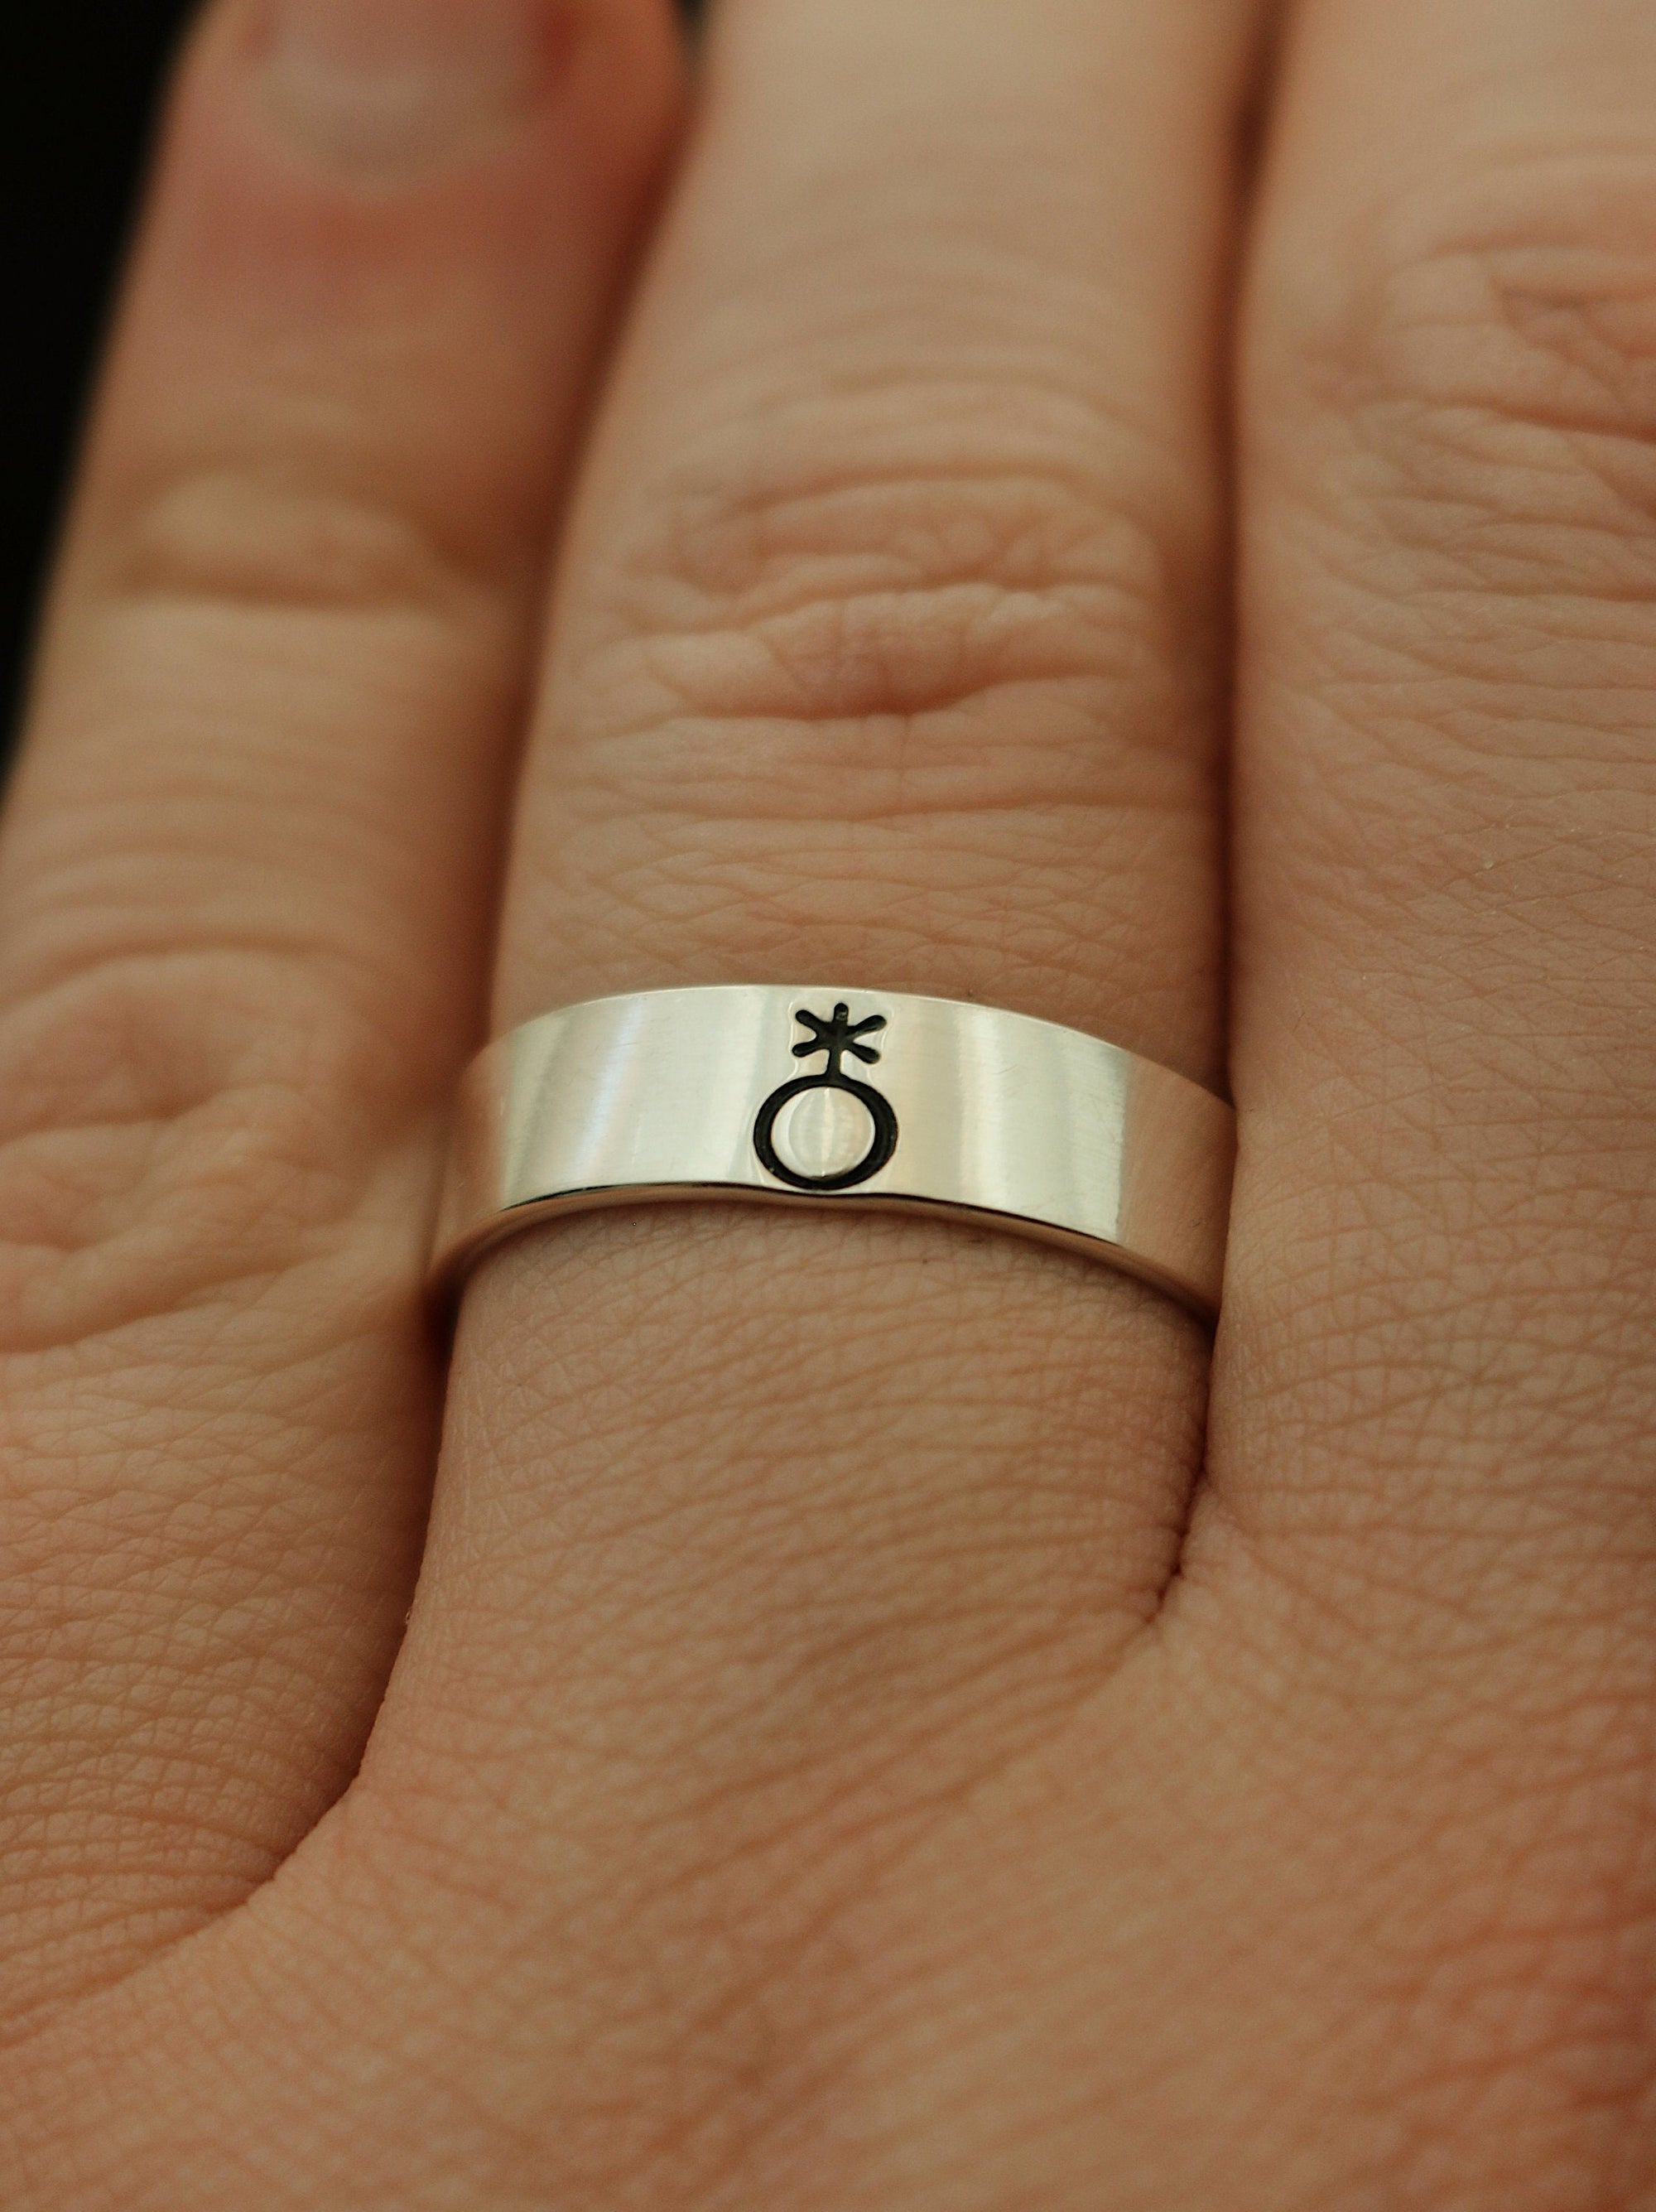 Non Binary Ring | Genderqueer Jewelry | Non-Binary Pride Jewelry | LGBTQ+ Pride Ring | Gender Fluid Ring | Genderless Jewelry